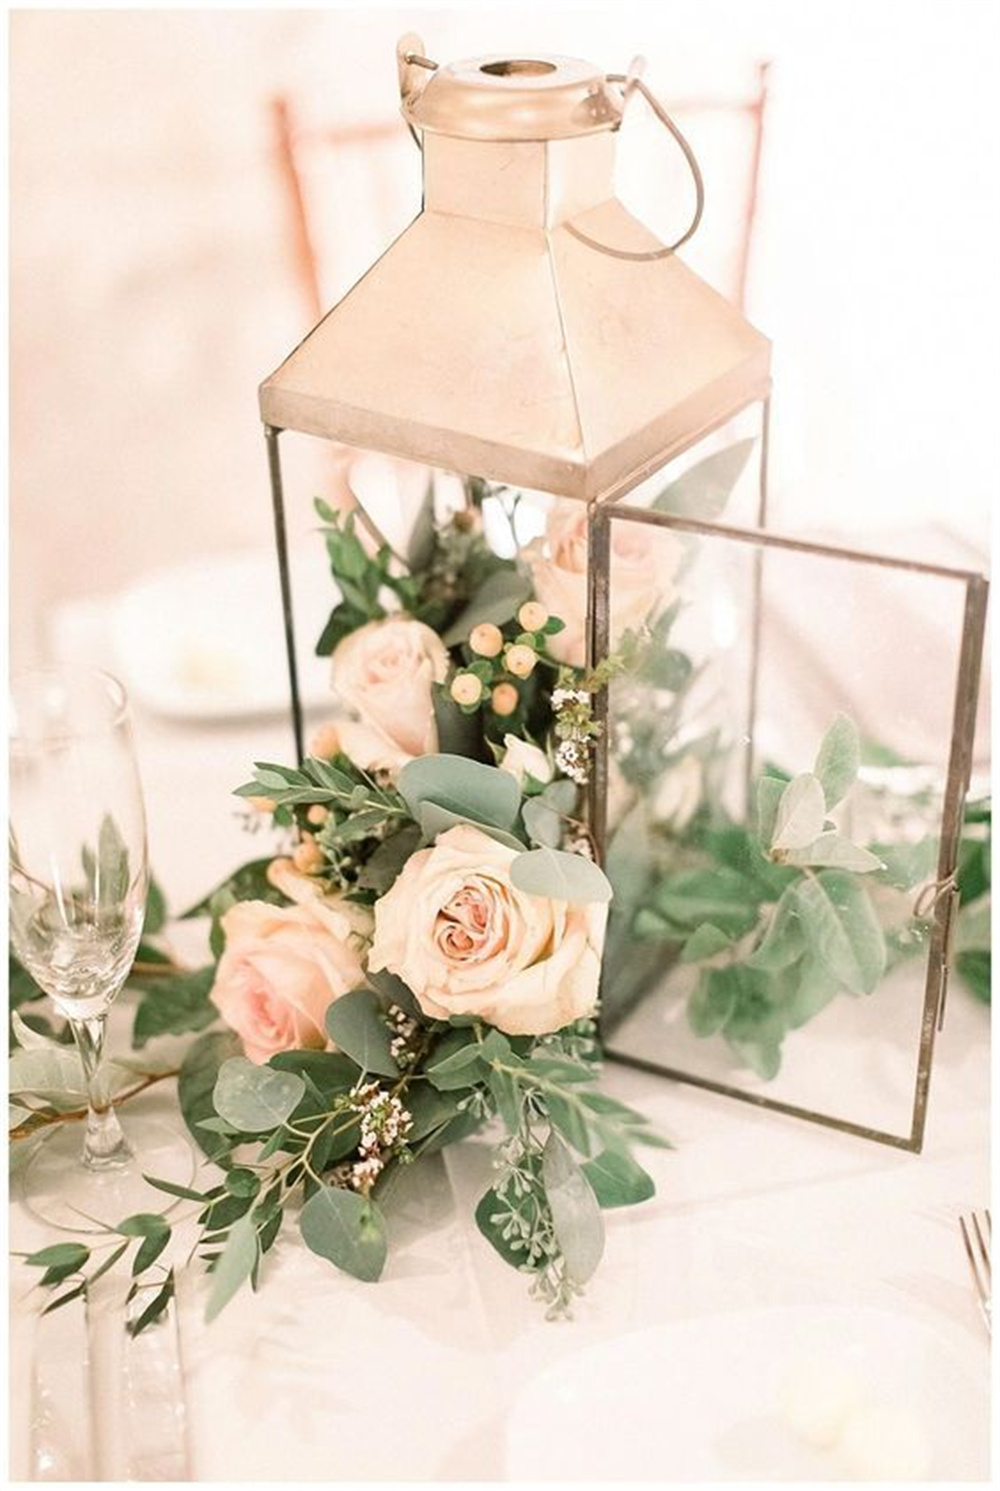 Chic Floral Wedding Centerpieces with Lanterns